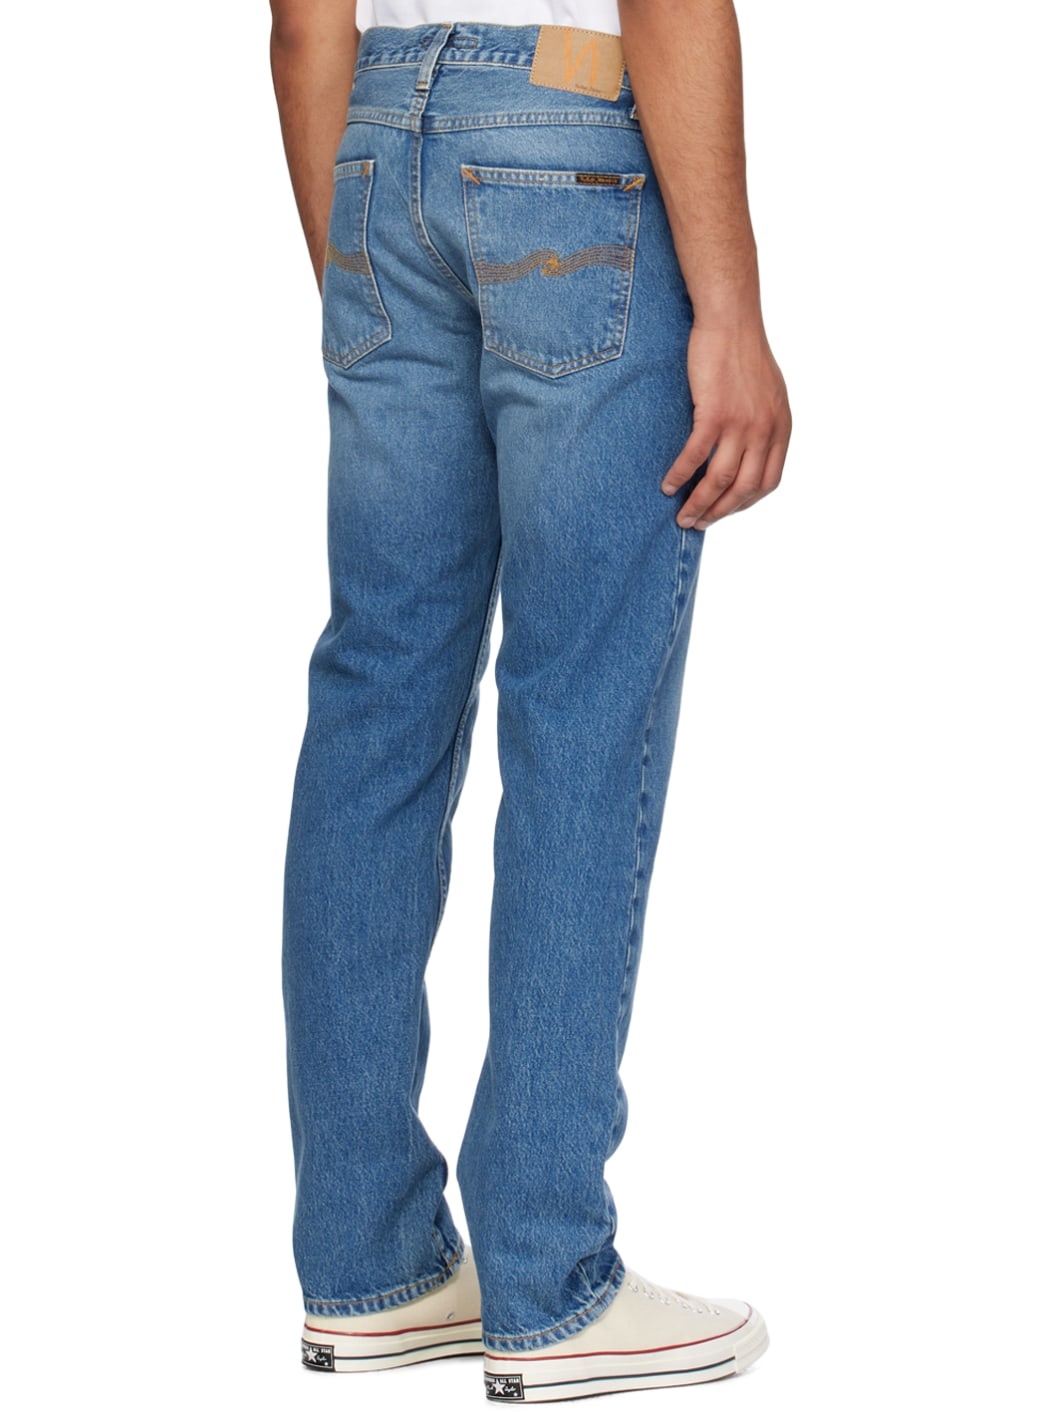 Blue Gritty Jackson Jeans - 3